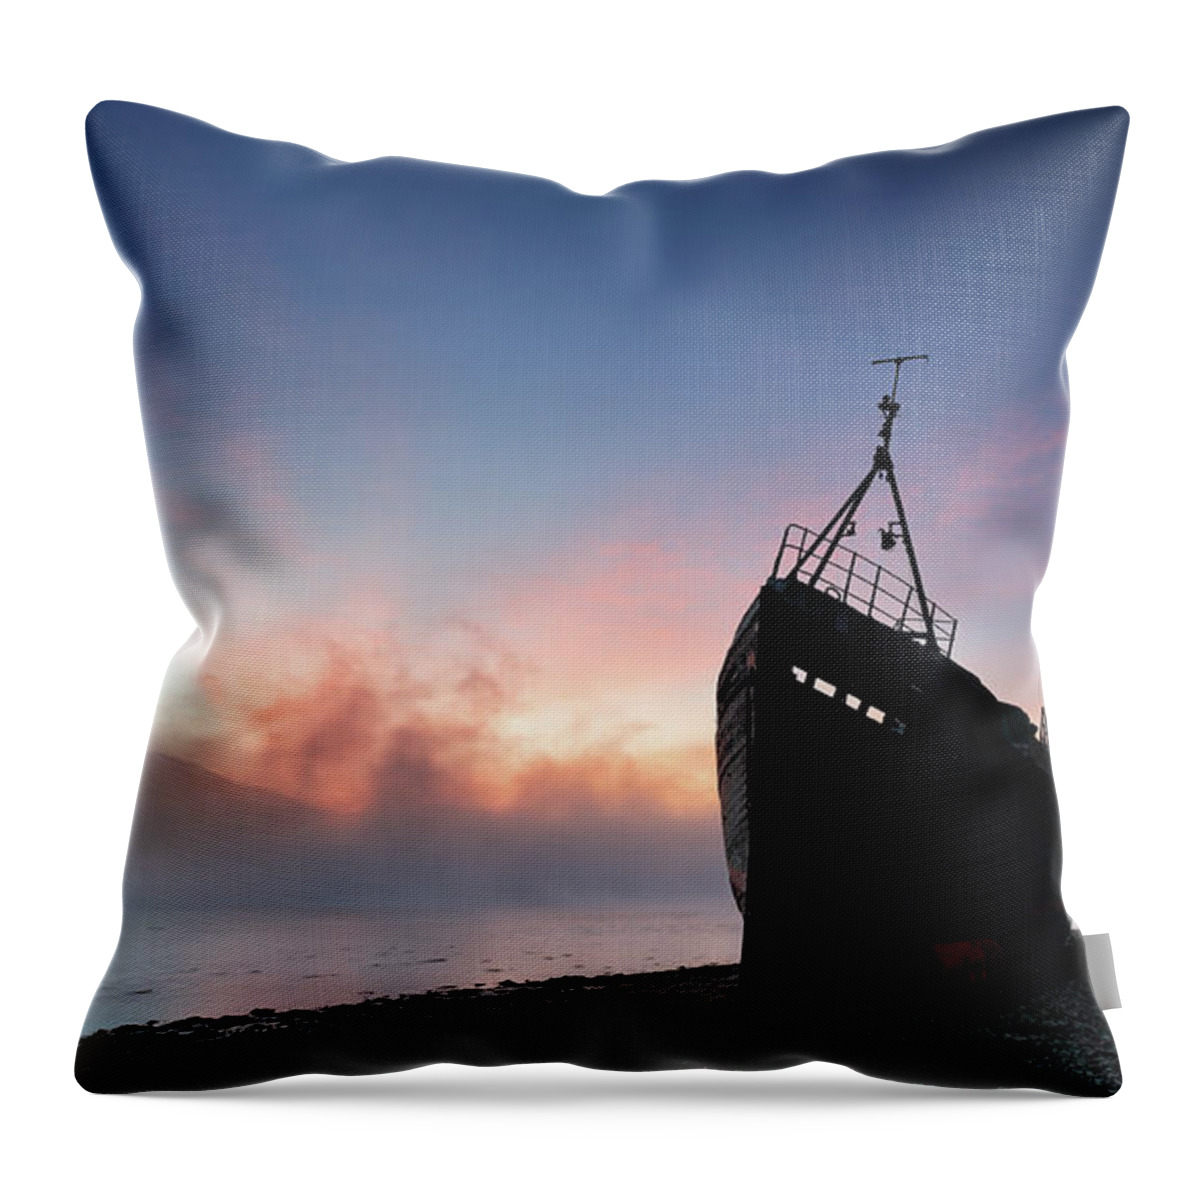 Sunset Throw Pillow featuring the photograph Loch Linnhe Misty Shipwreck by Grant Glendinning